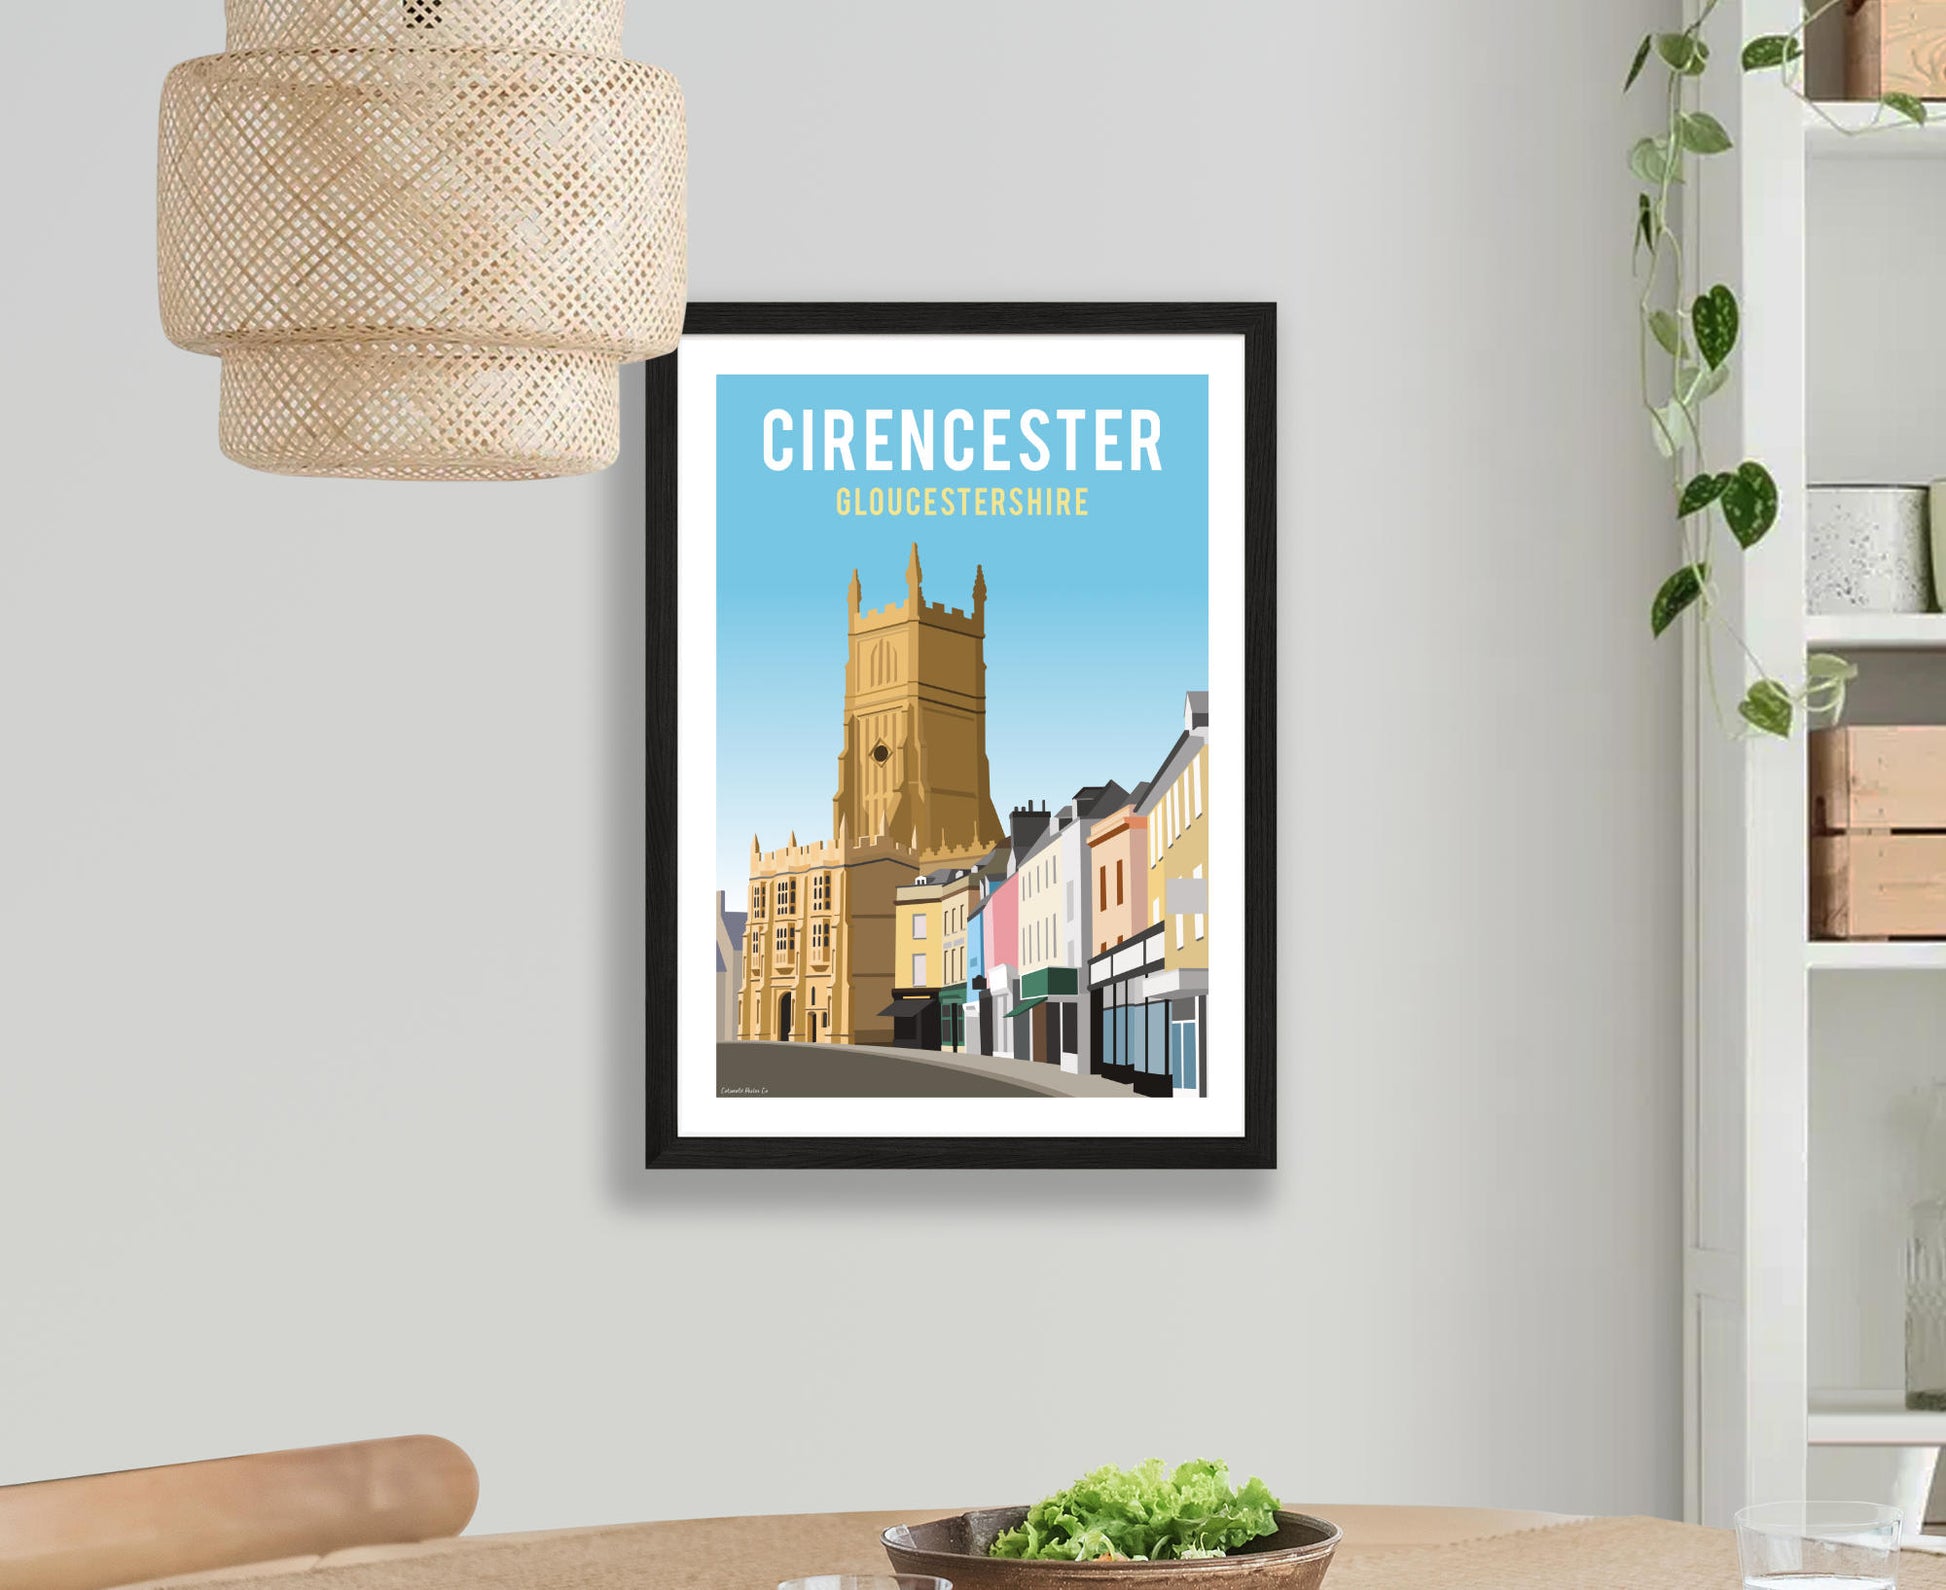 Cirencester marketplace poster in black frame